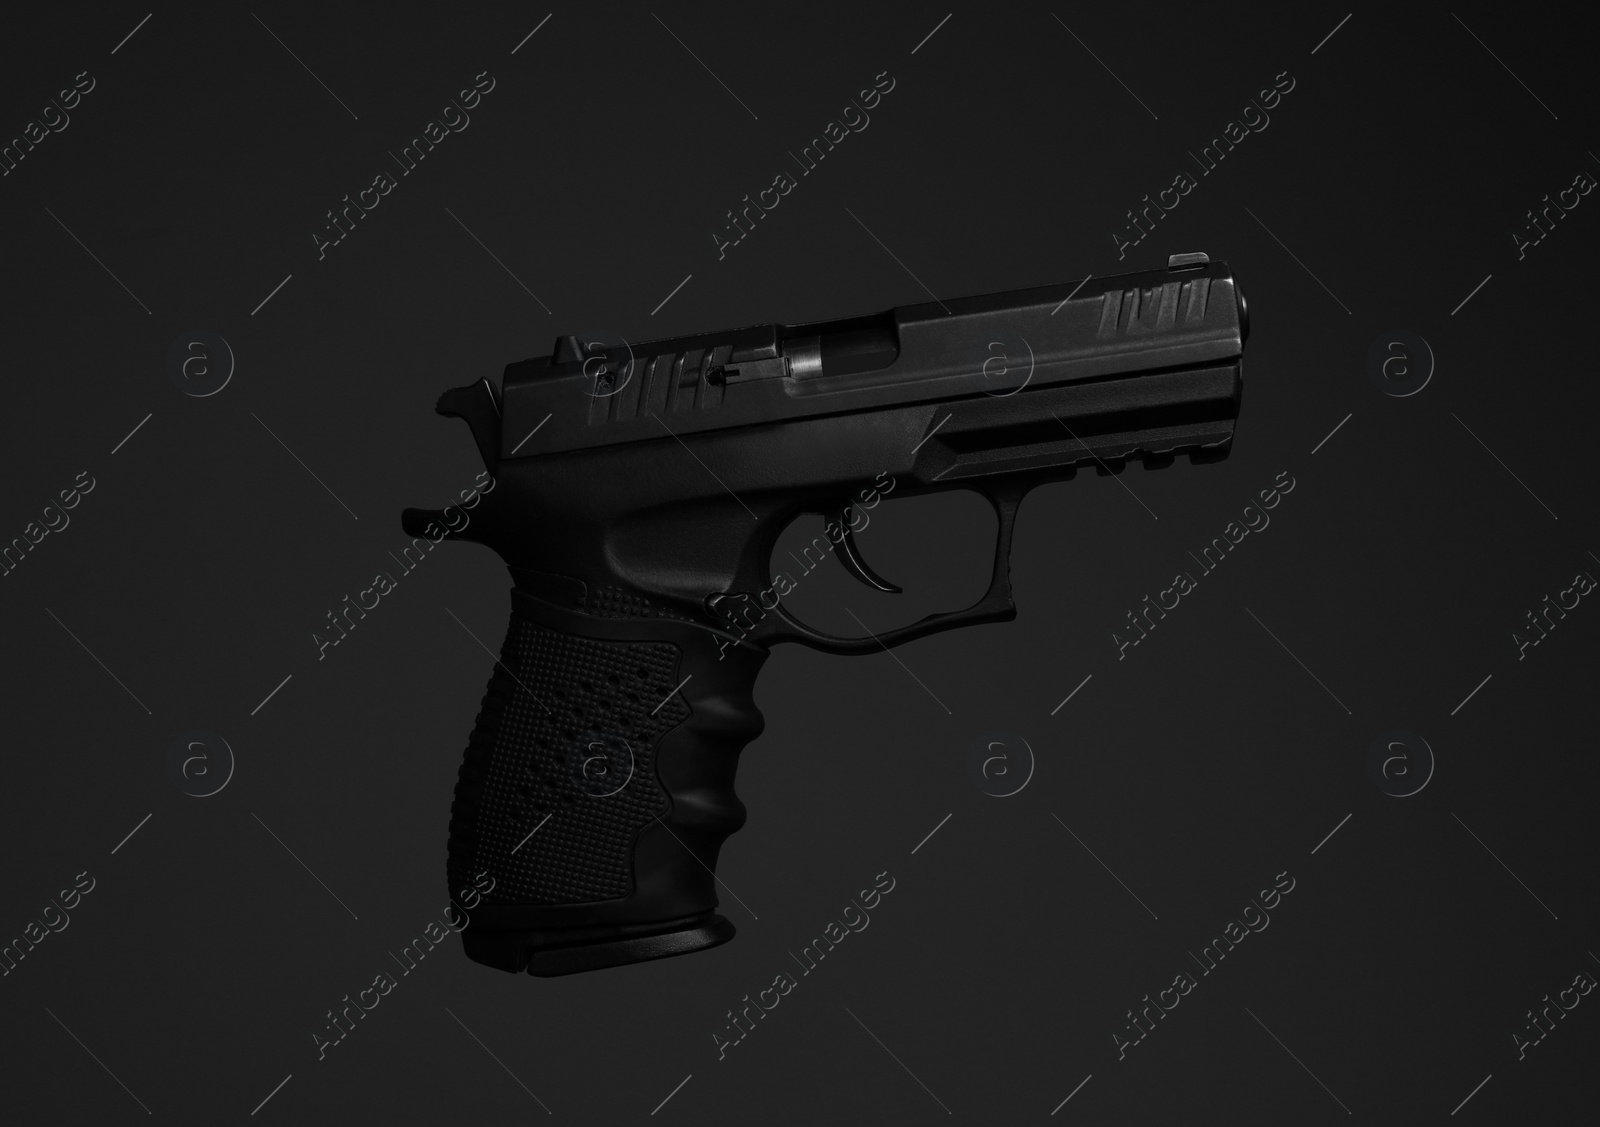 Photo of Standard handgun on dark background. Semi-automatic pistol